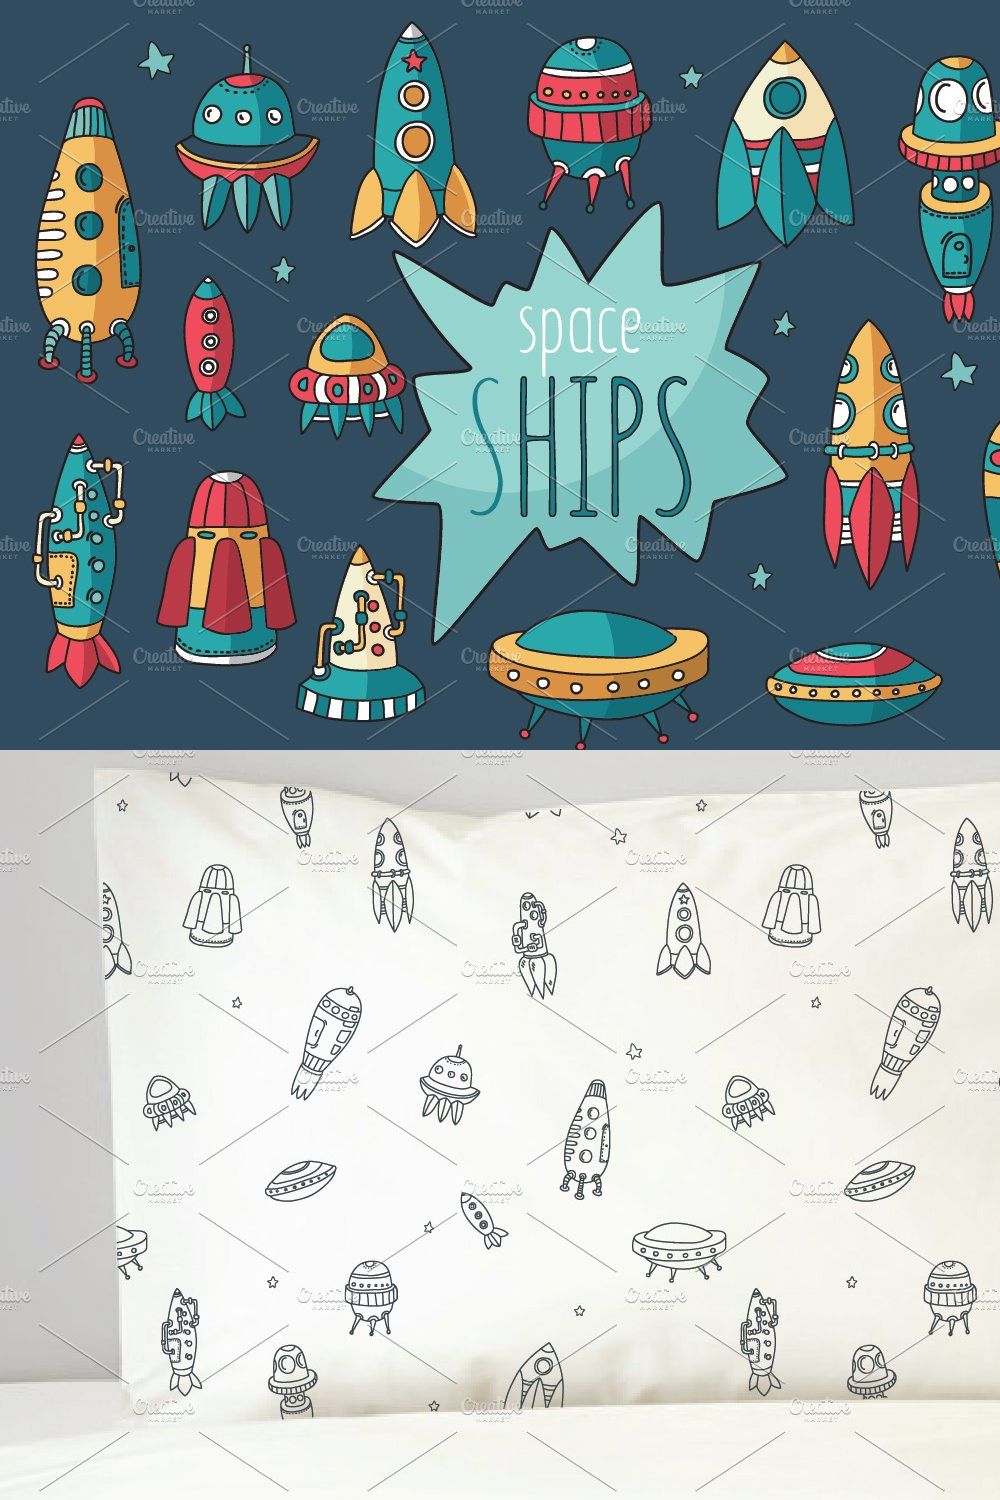 Spaceships set + pattern pinterest preview image.